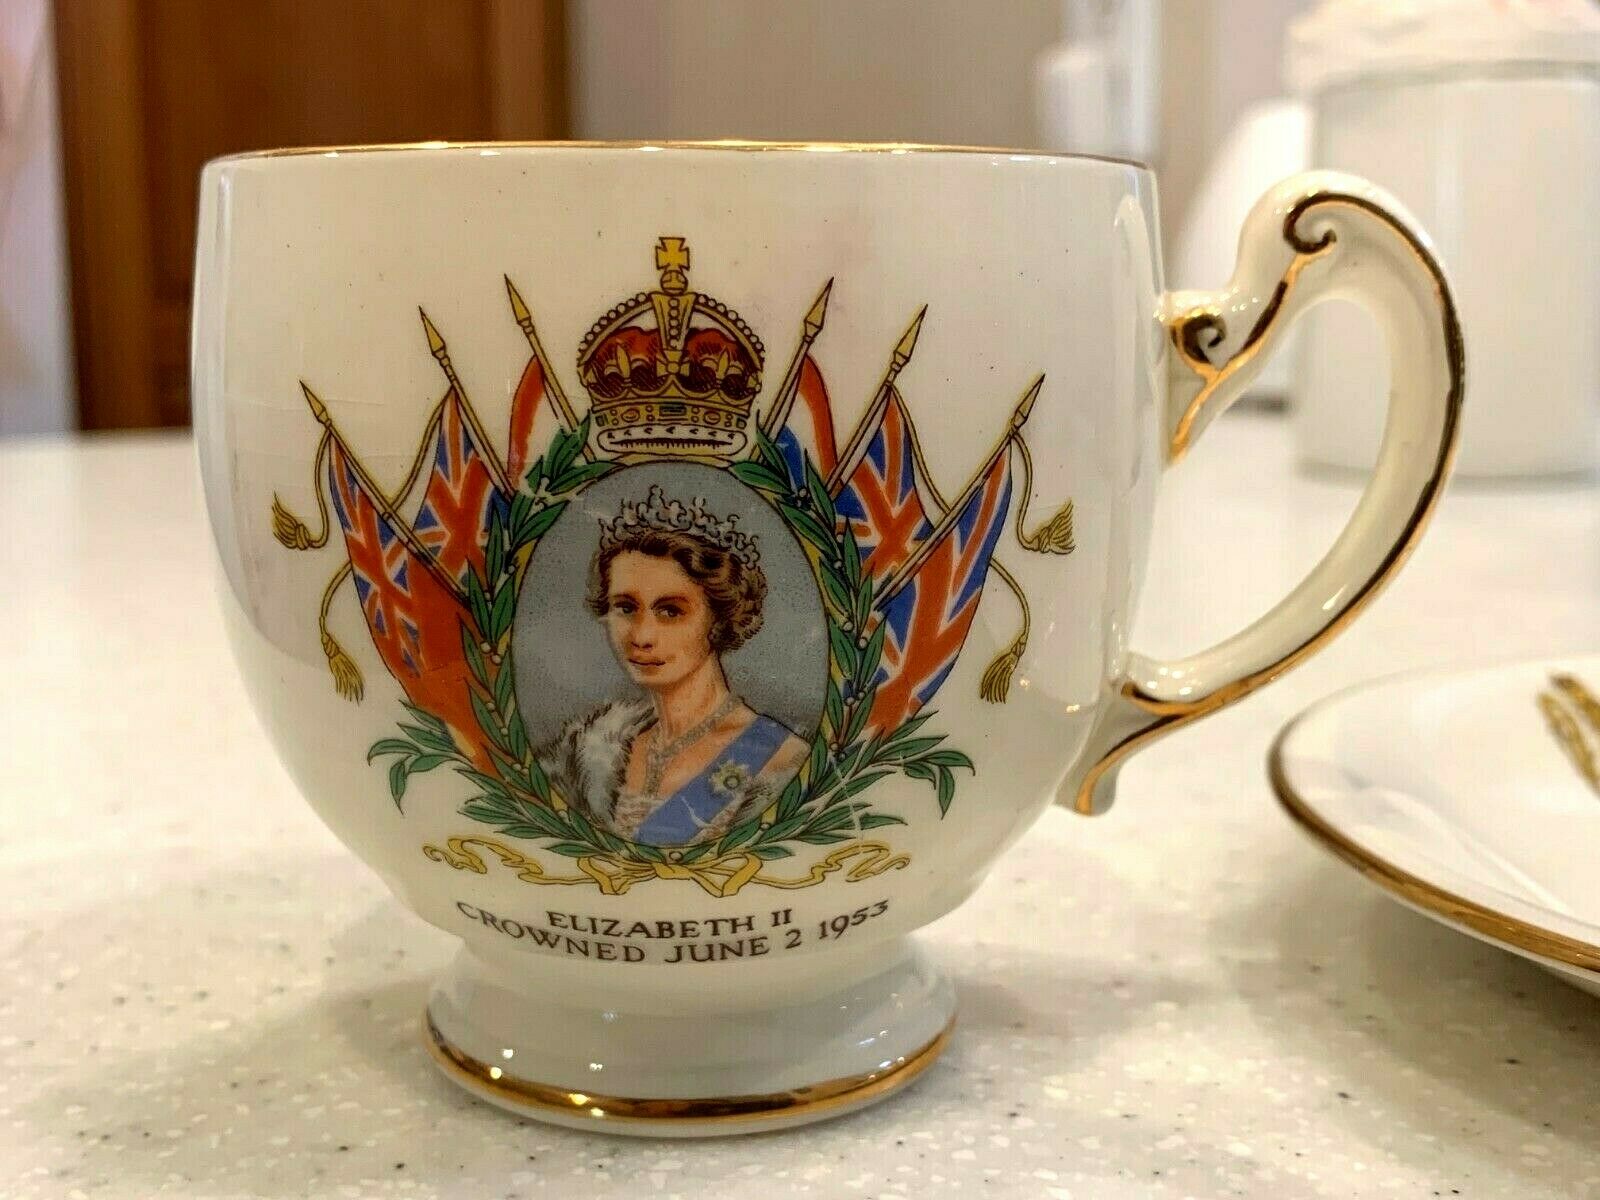 Royal Winton Elizabeth Ii Coronation Commemorative Teacup & Saucer June 2, 1953